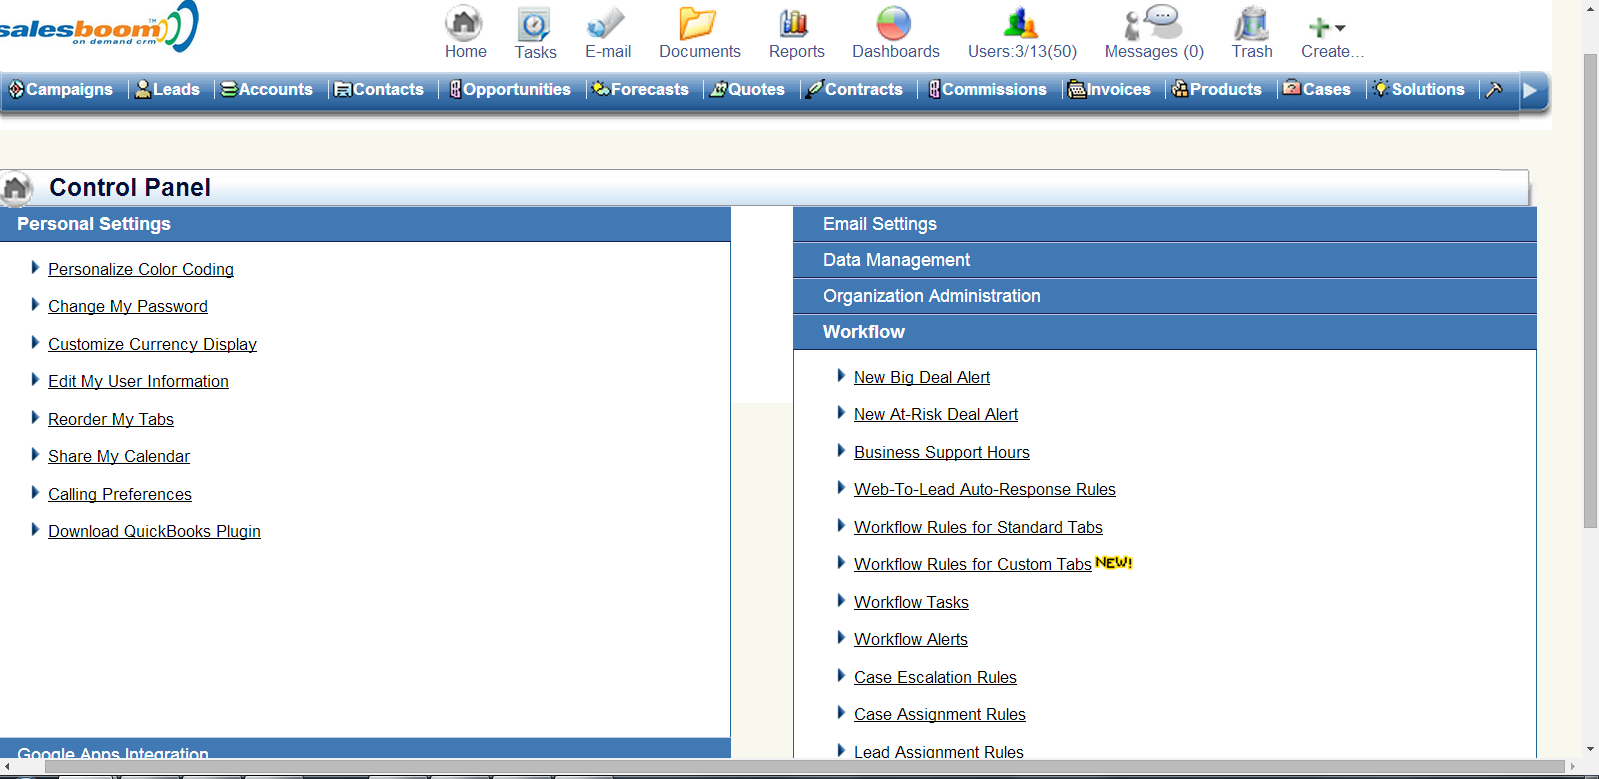 Cloud-crm-workflow-management-screenshot | Salesboom cloud crm software